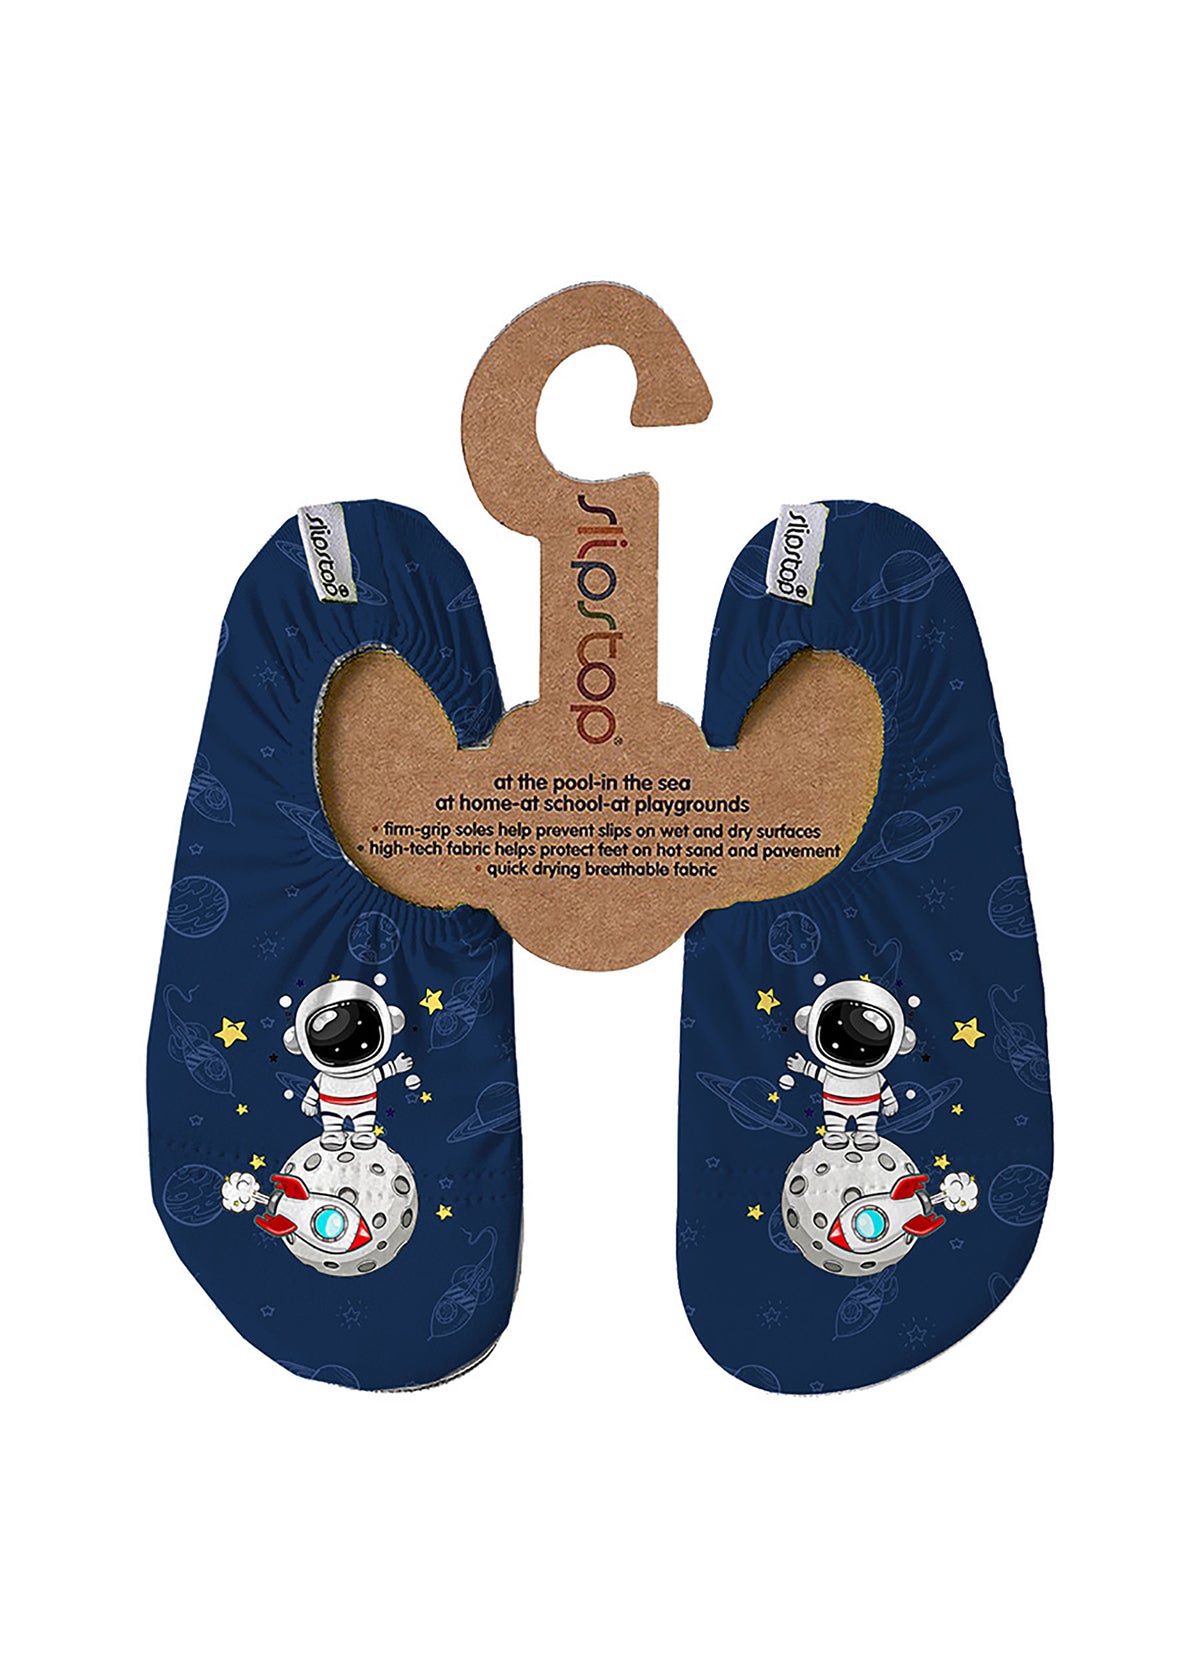 Children's slippers - Nasa, astronaut, dark blue